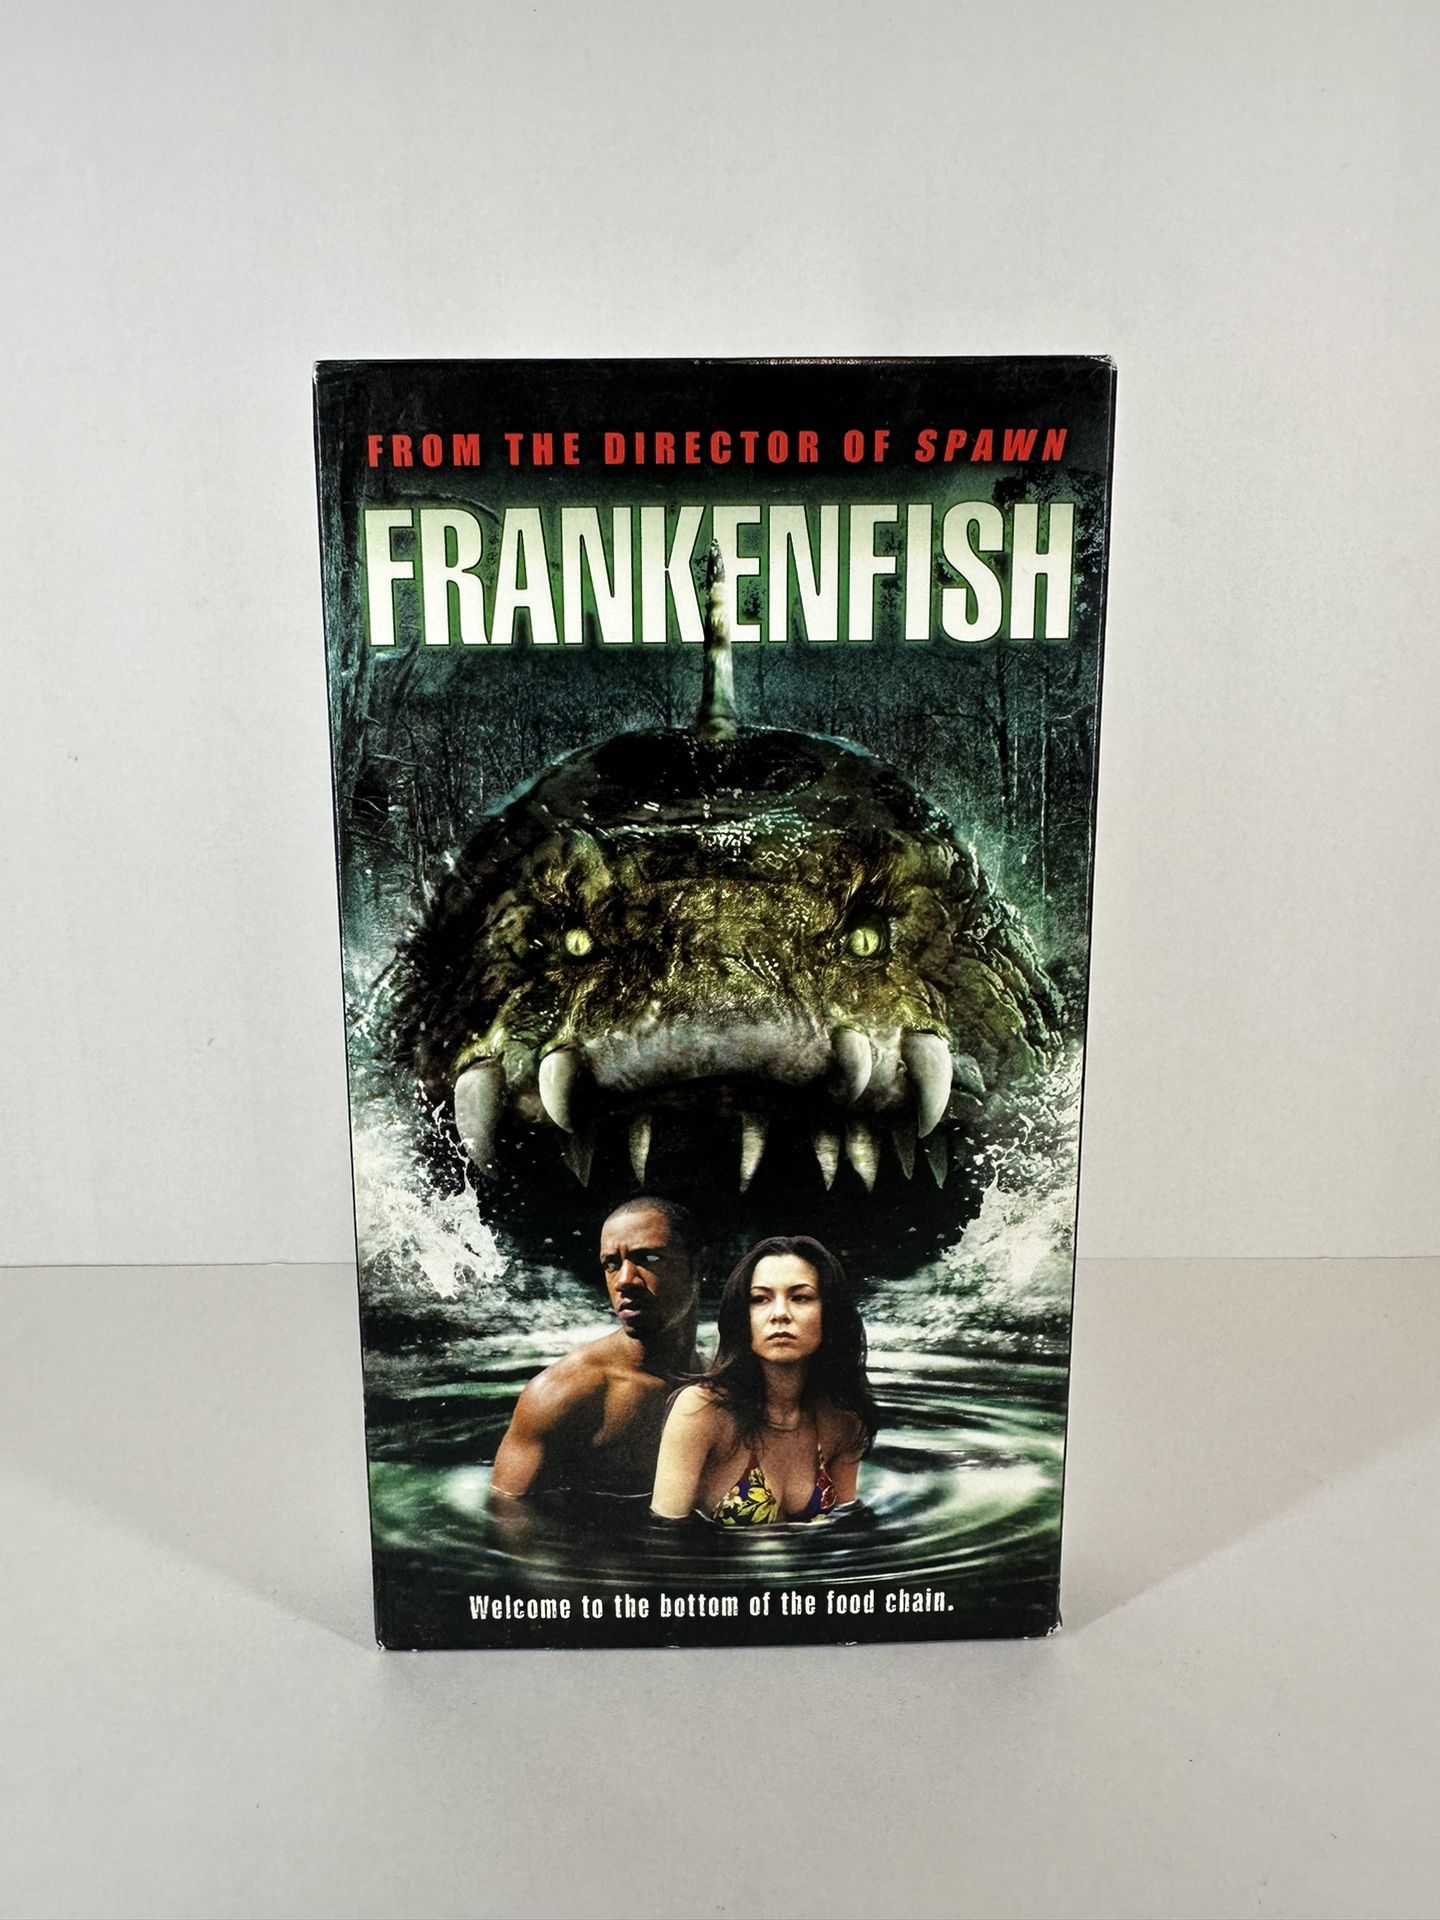 FRANKENFISH (2004, Columbia Tri-Star) VHS of Monster Horror Movie!